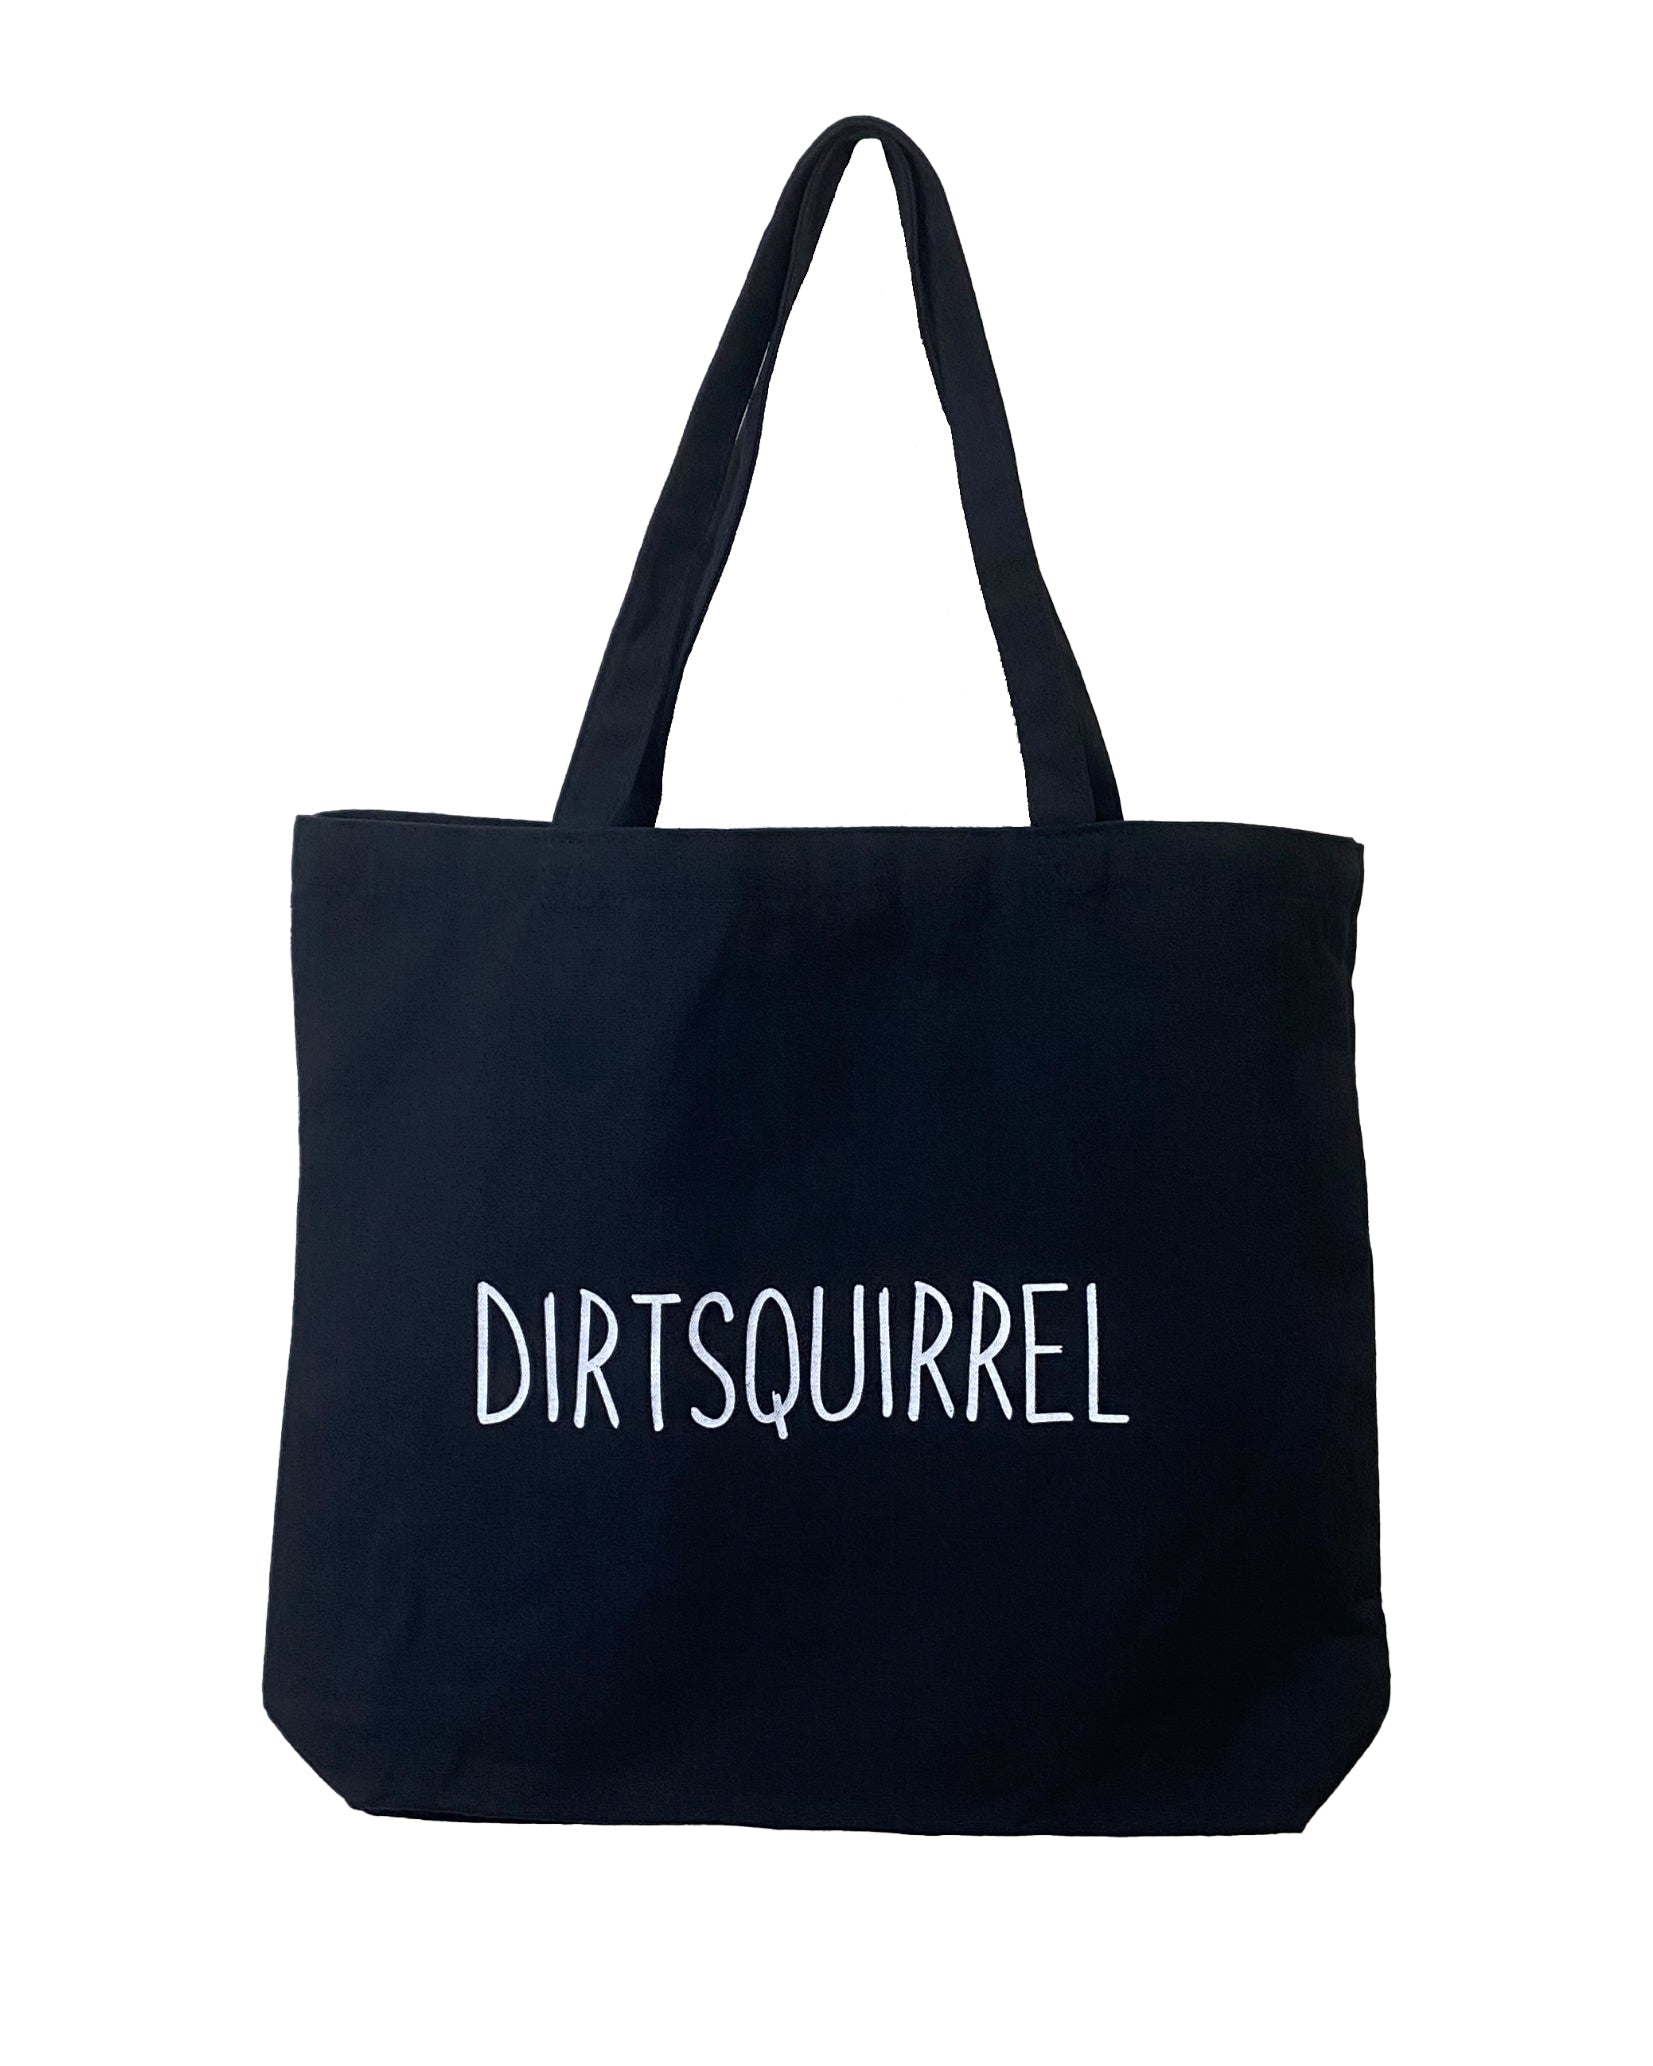 Dirt Squirrel Logo Tote Bag Front